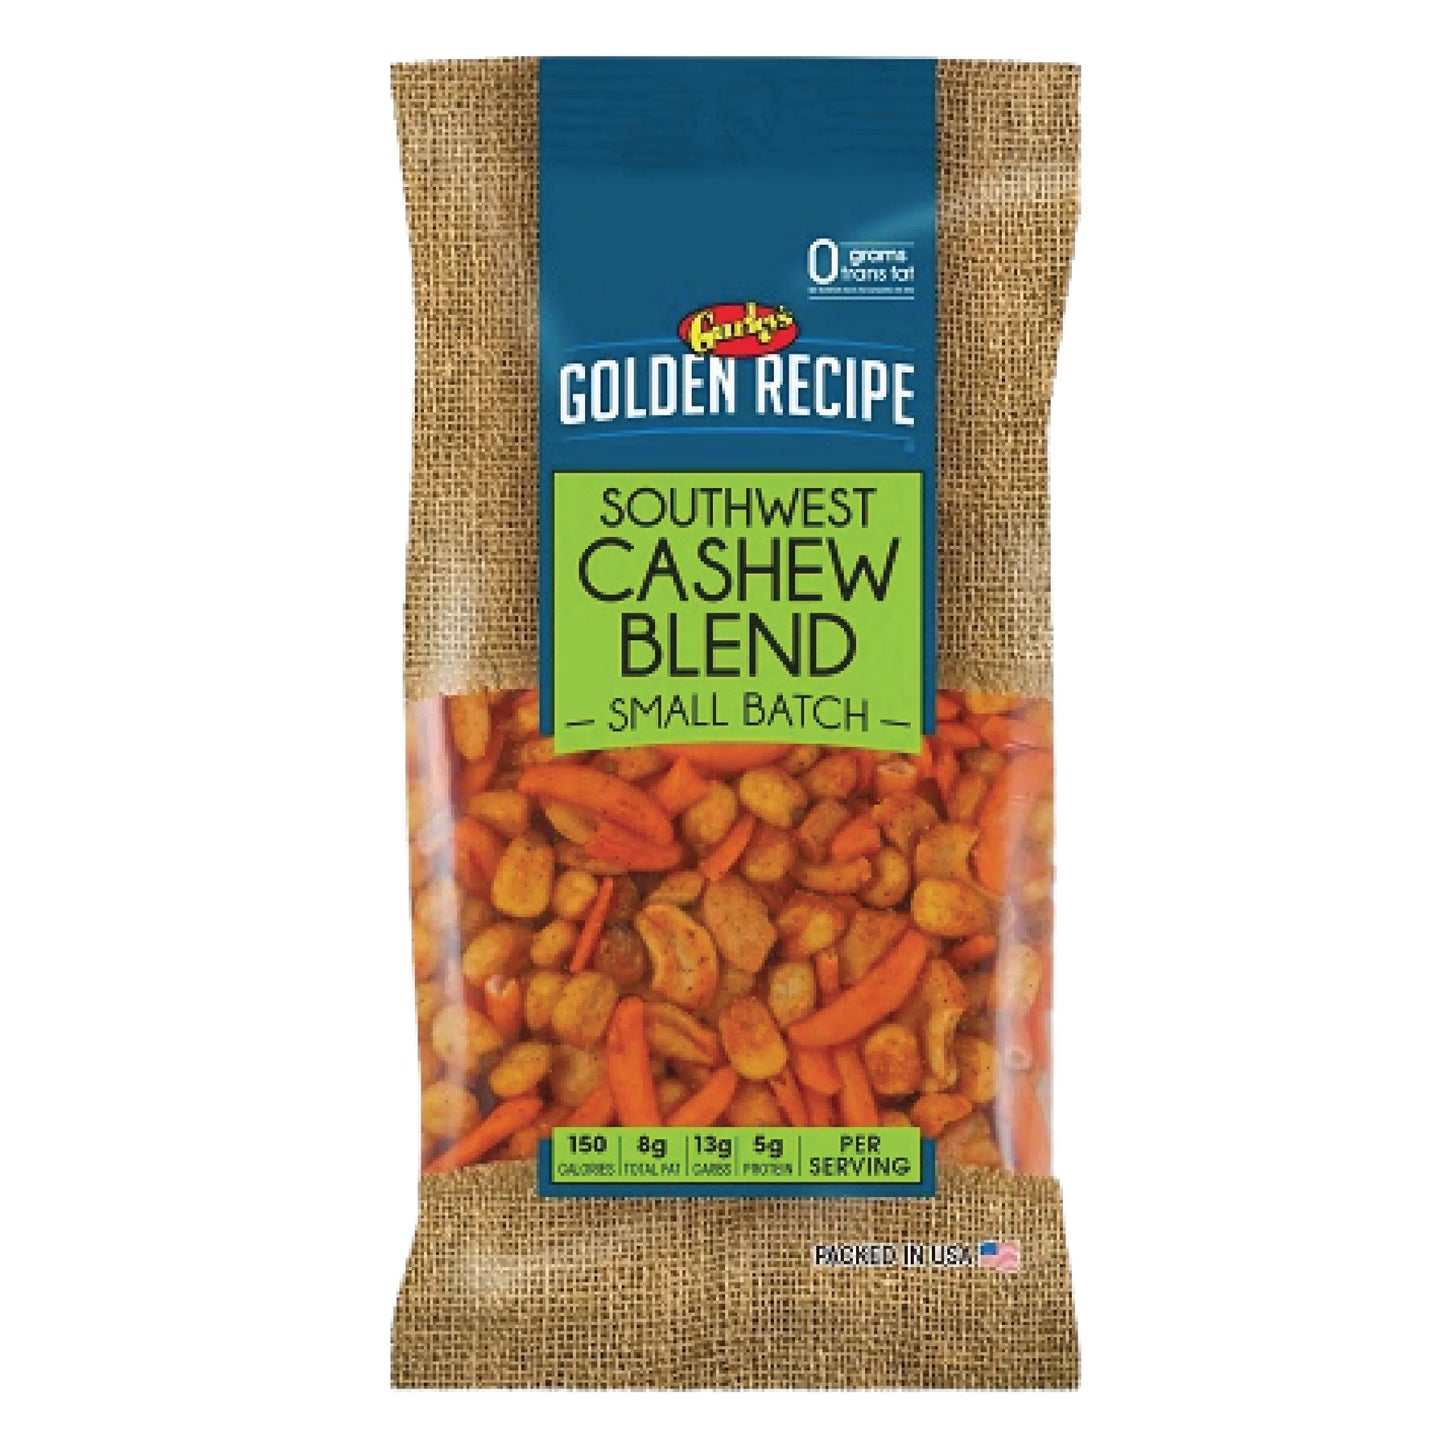 Gurley’s Golden Recipe Southwest Cashew Blend Small Batch 4.75oz (Pack of 8)